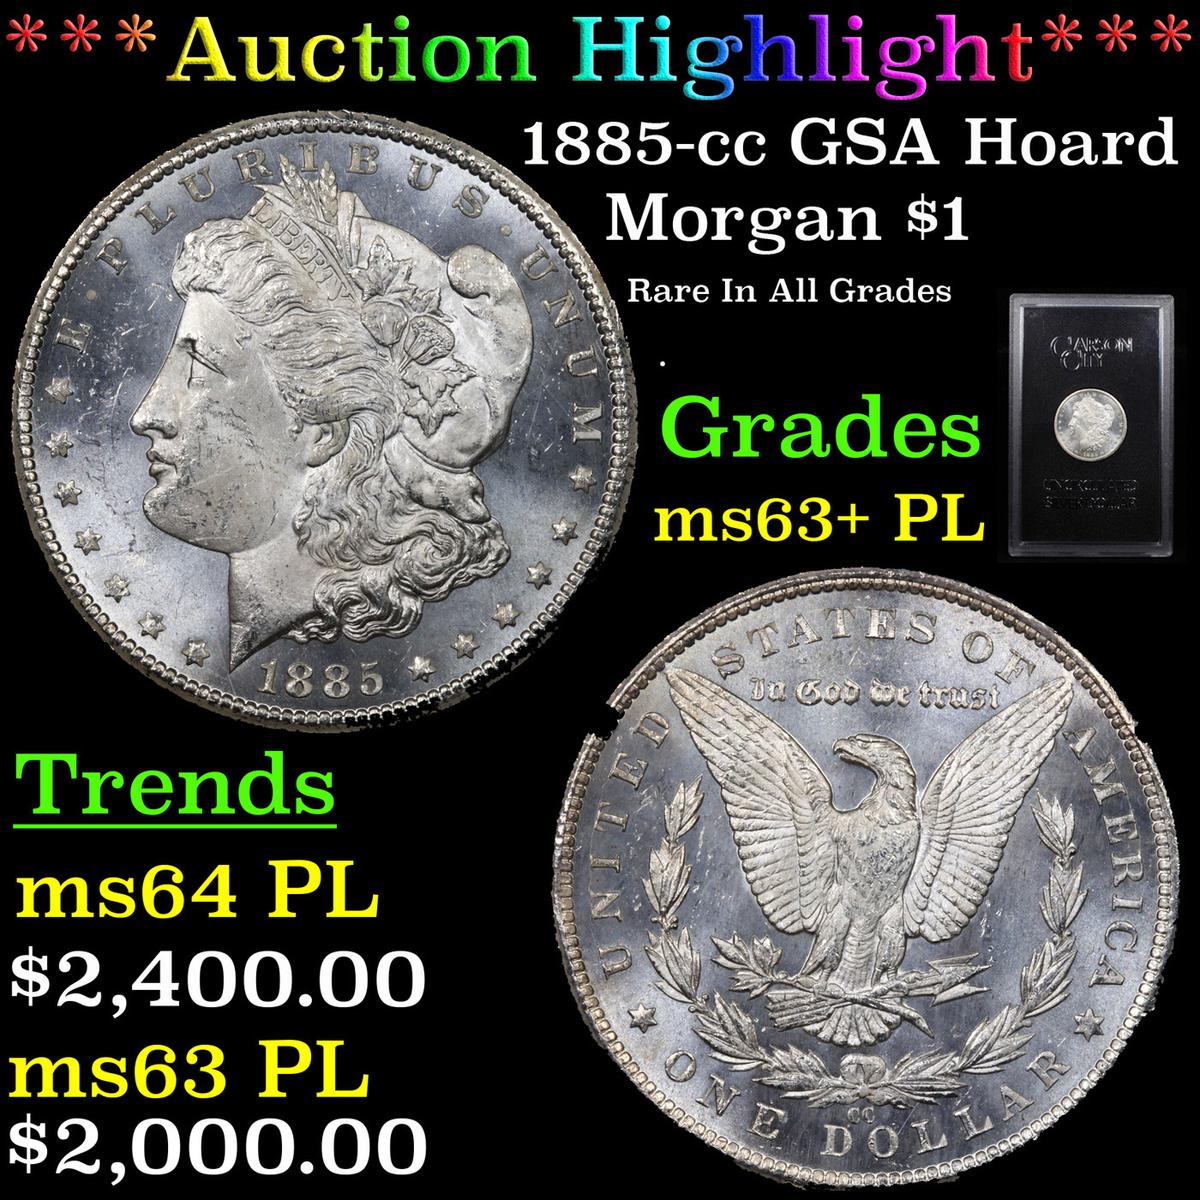 ***Auction Highlight*** 1885-cc GSA Hoard Morgan Dollar $1 Grades Select Unc+ PL (fc)